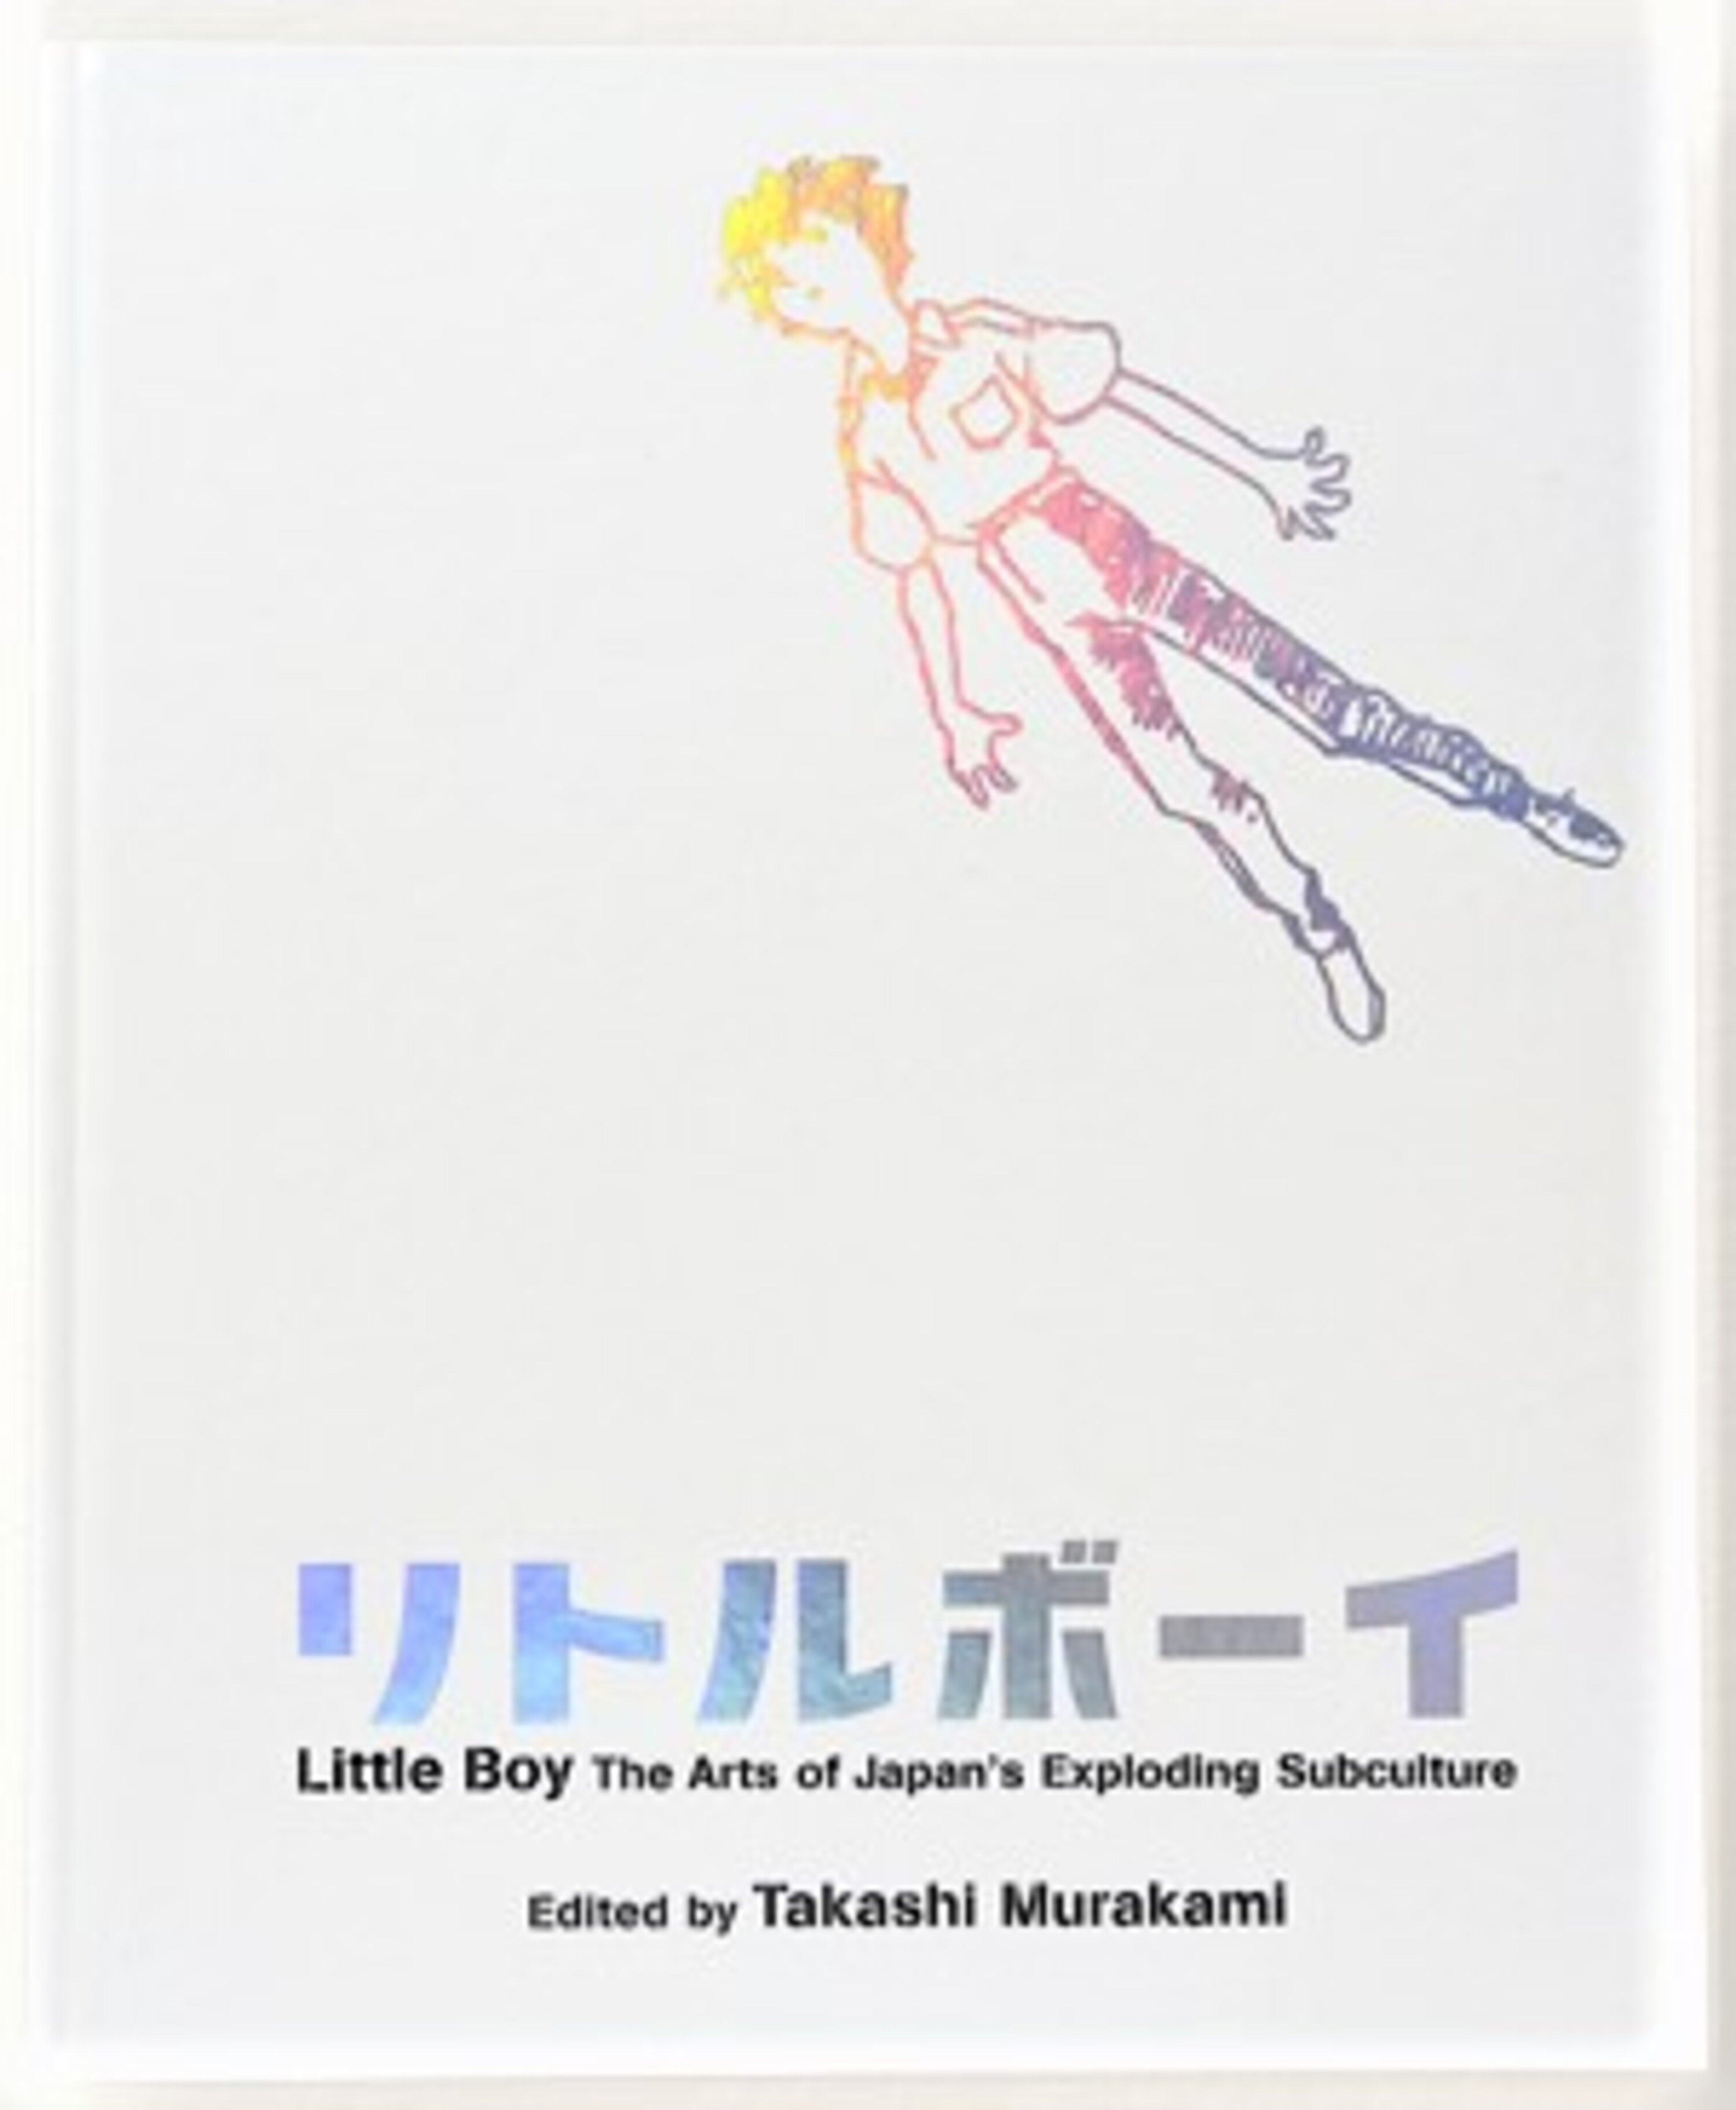 Takashi Murakami ©TM/KK Books / Little Boy: The Arts Of Japan's